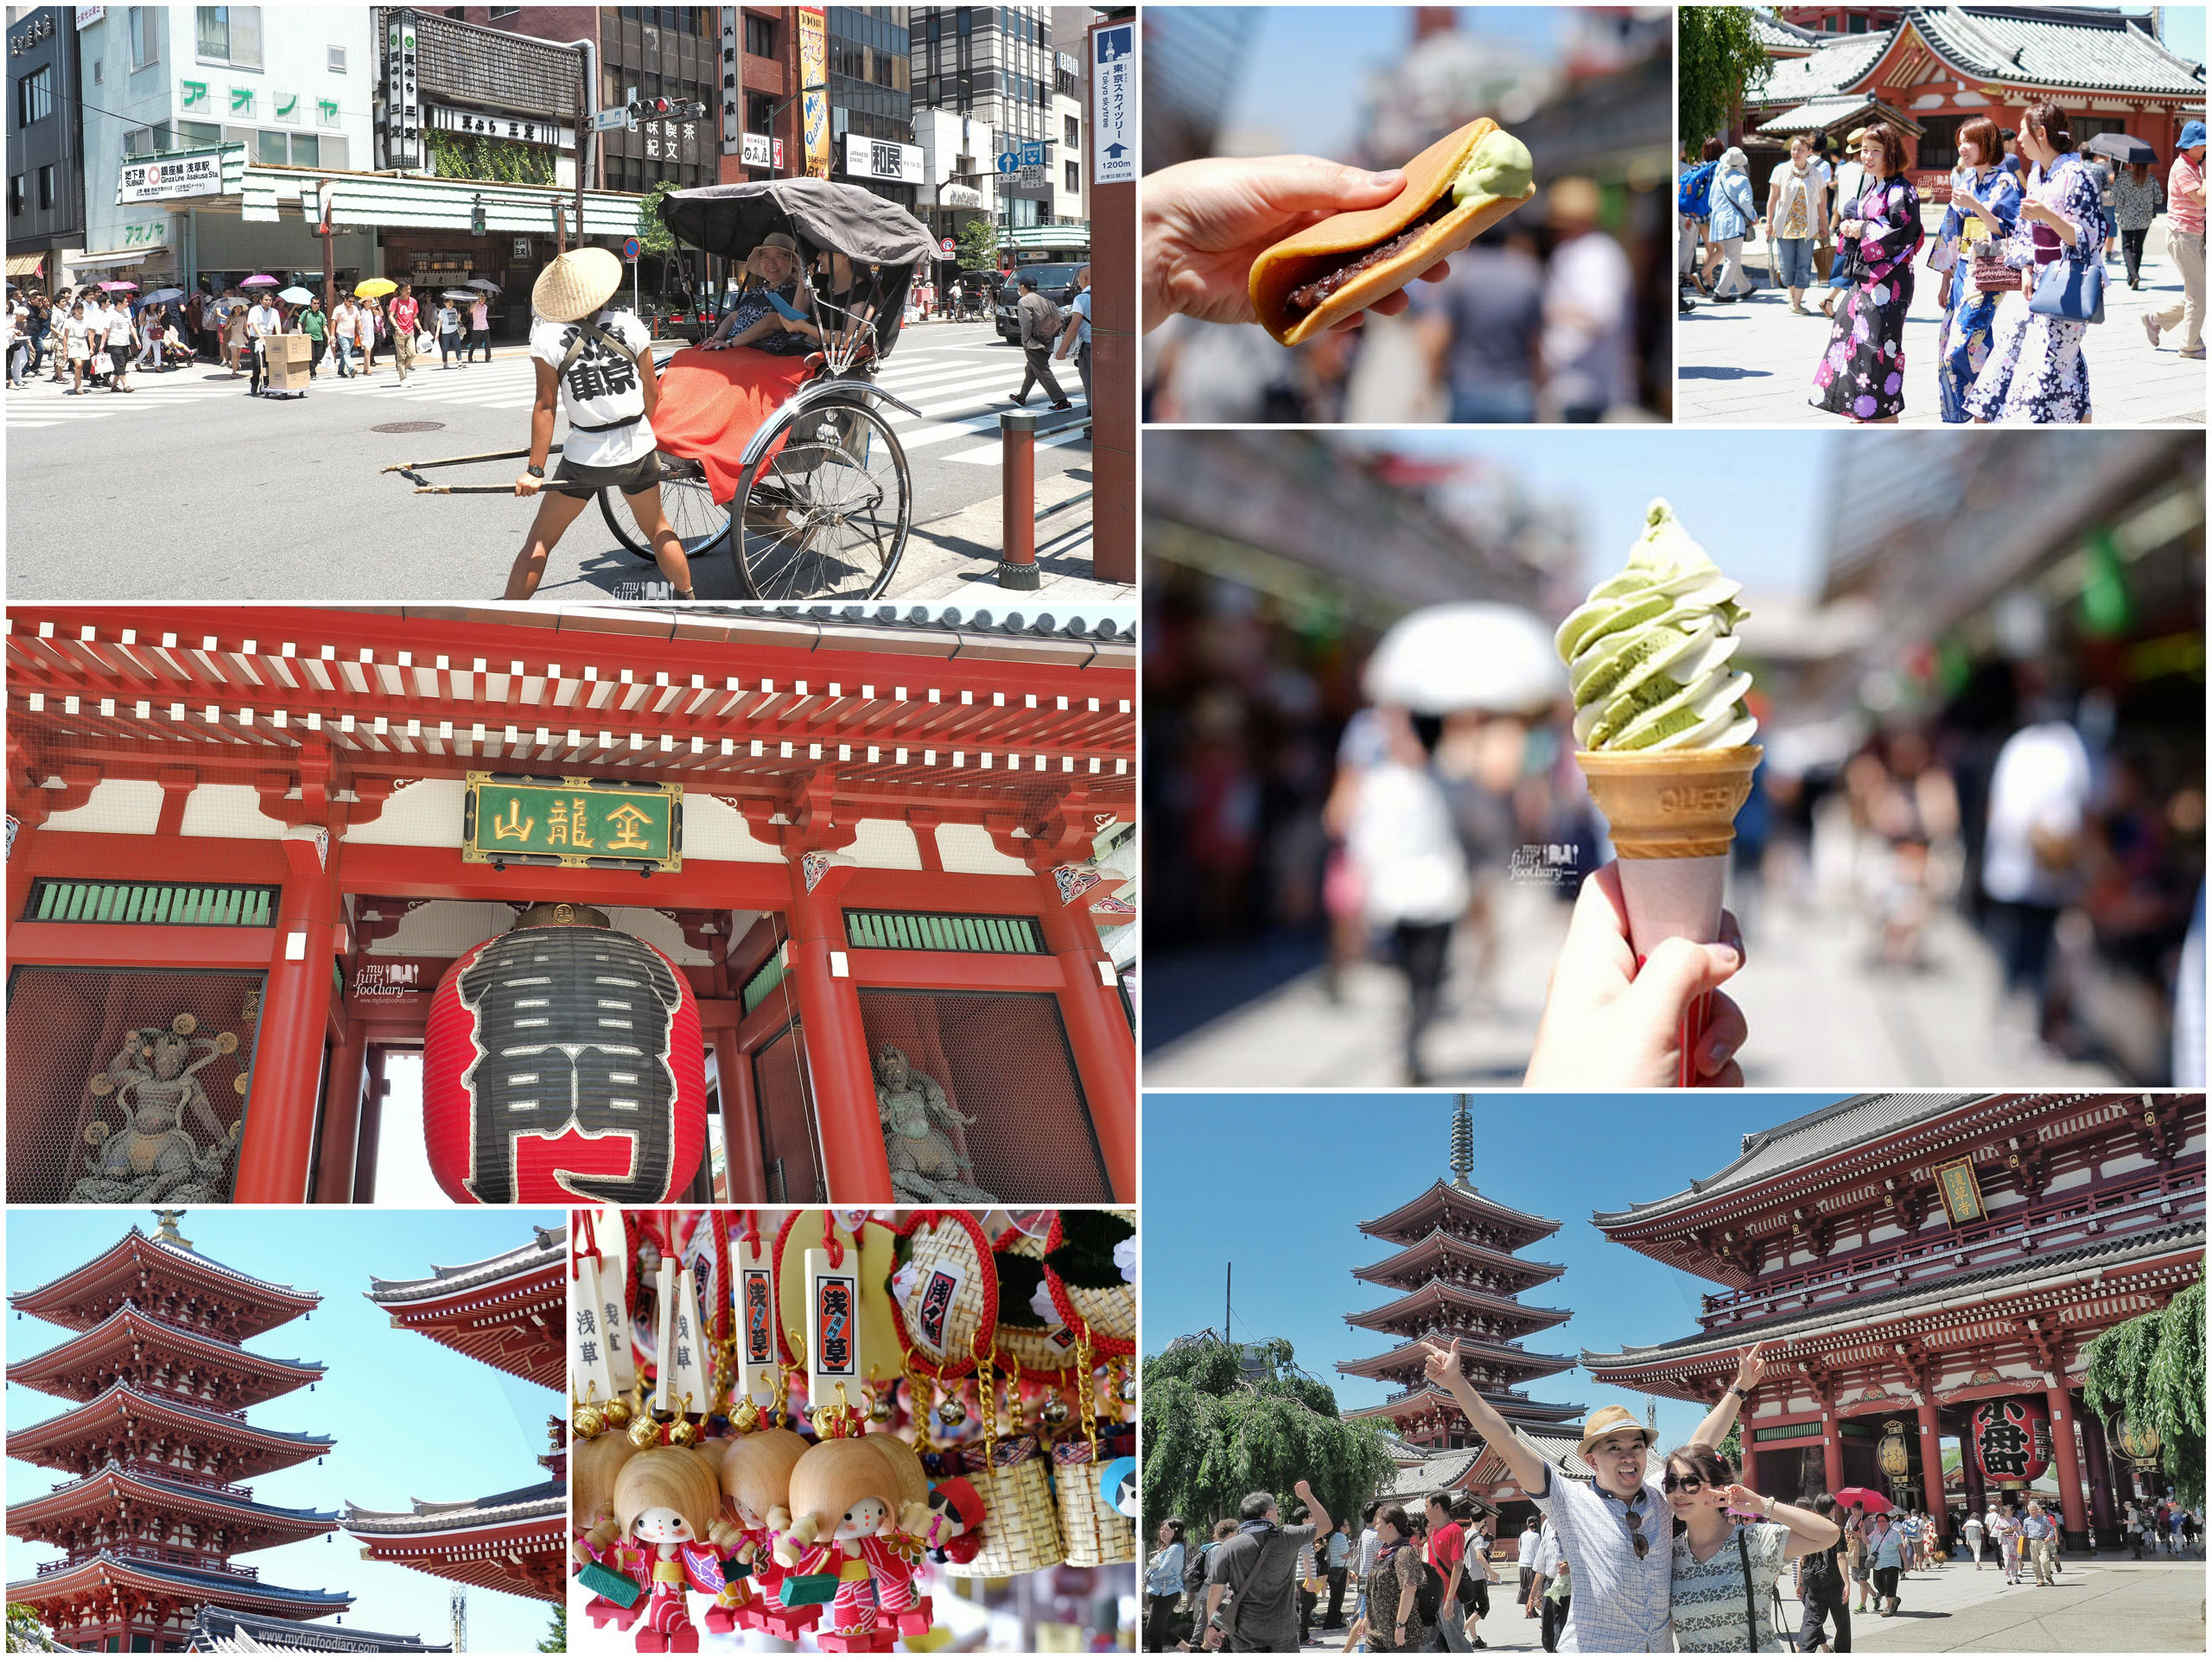 Sightseeing and snacking at Asakusa Tokyo by Myfunfoodiary